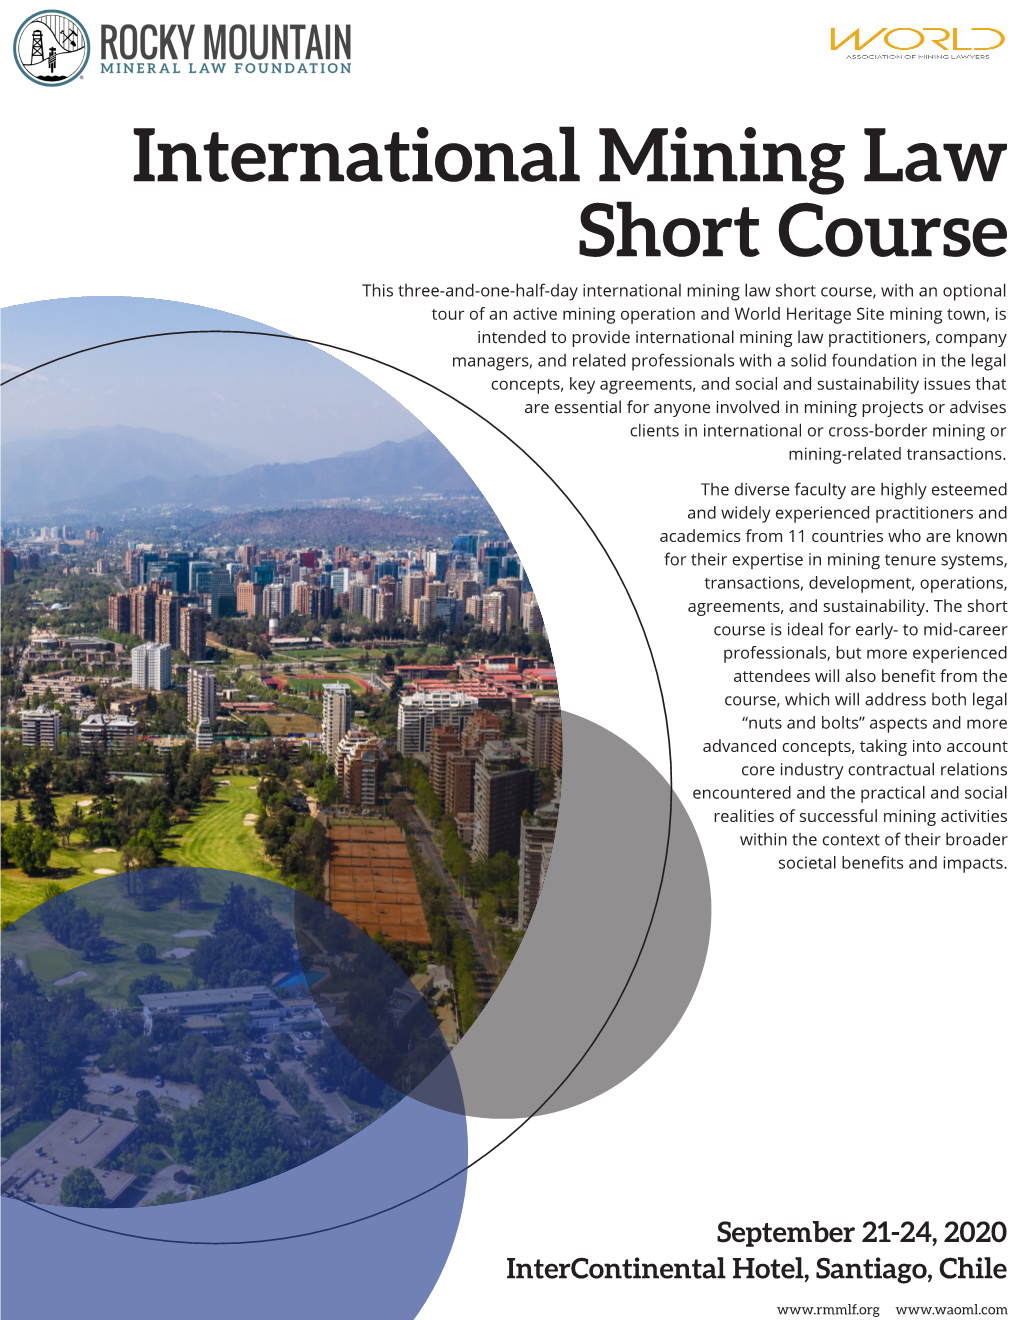 International Mining Law Short Course